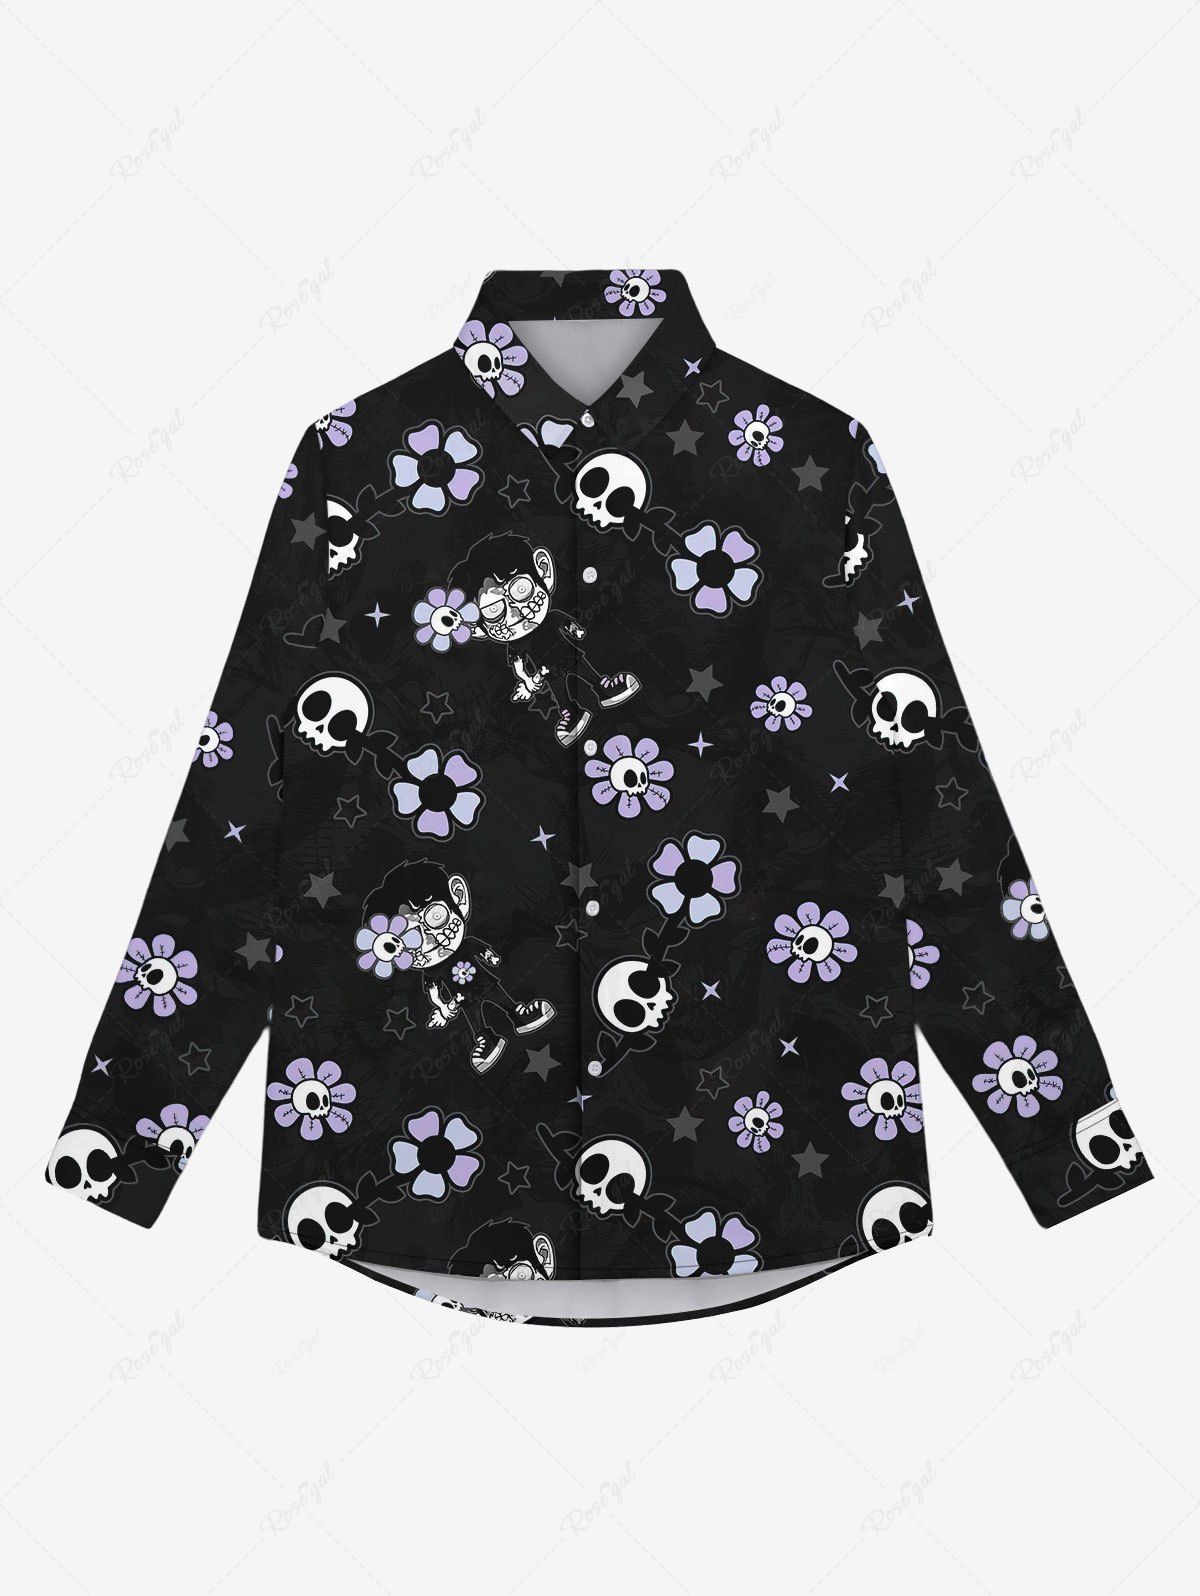 Discount Gothic Turn-down Collar Skull Sunflower Star Cartoon Boy Print Buttons Shirt For Men  